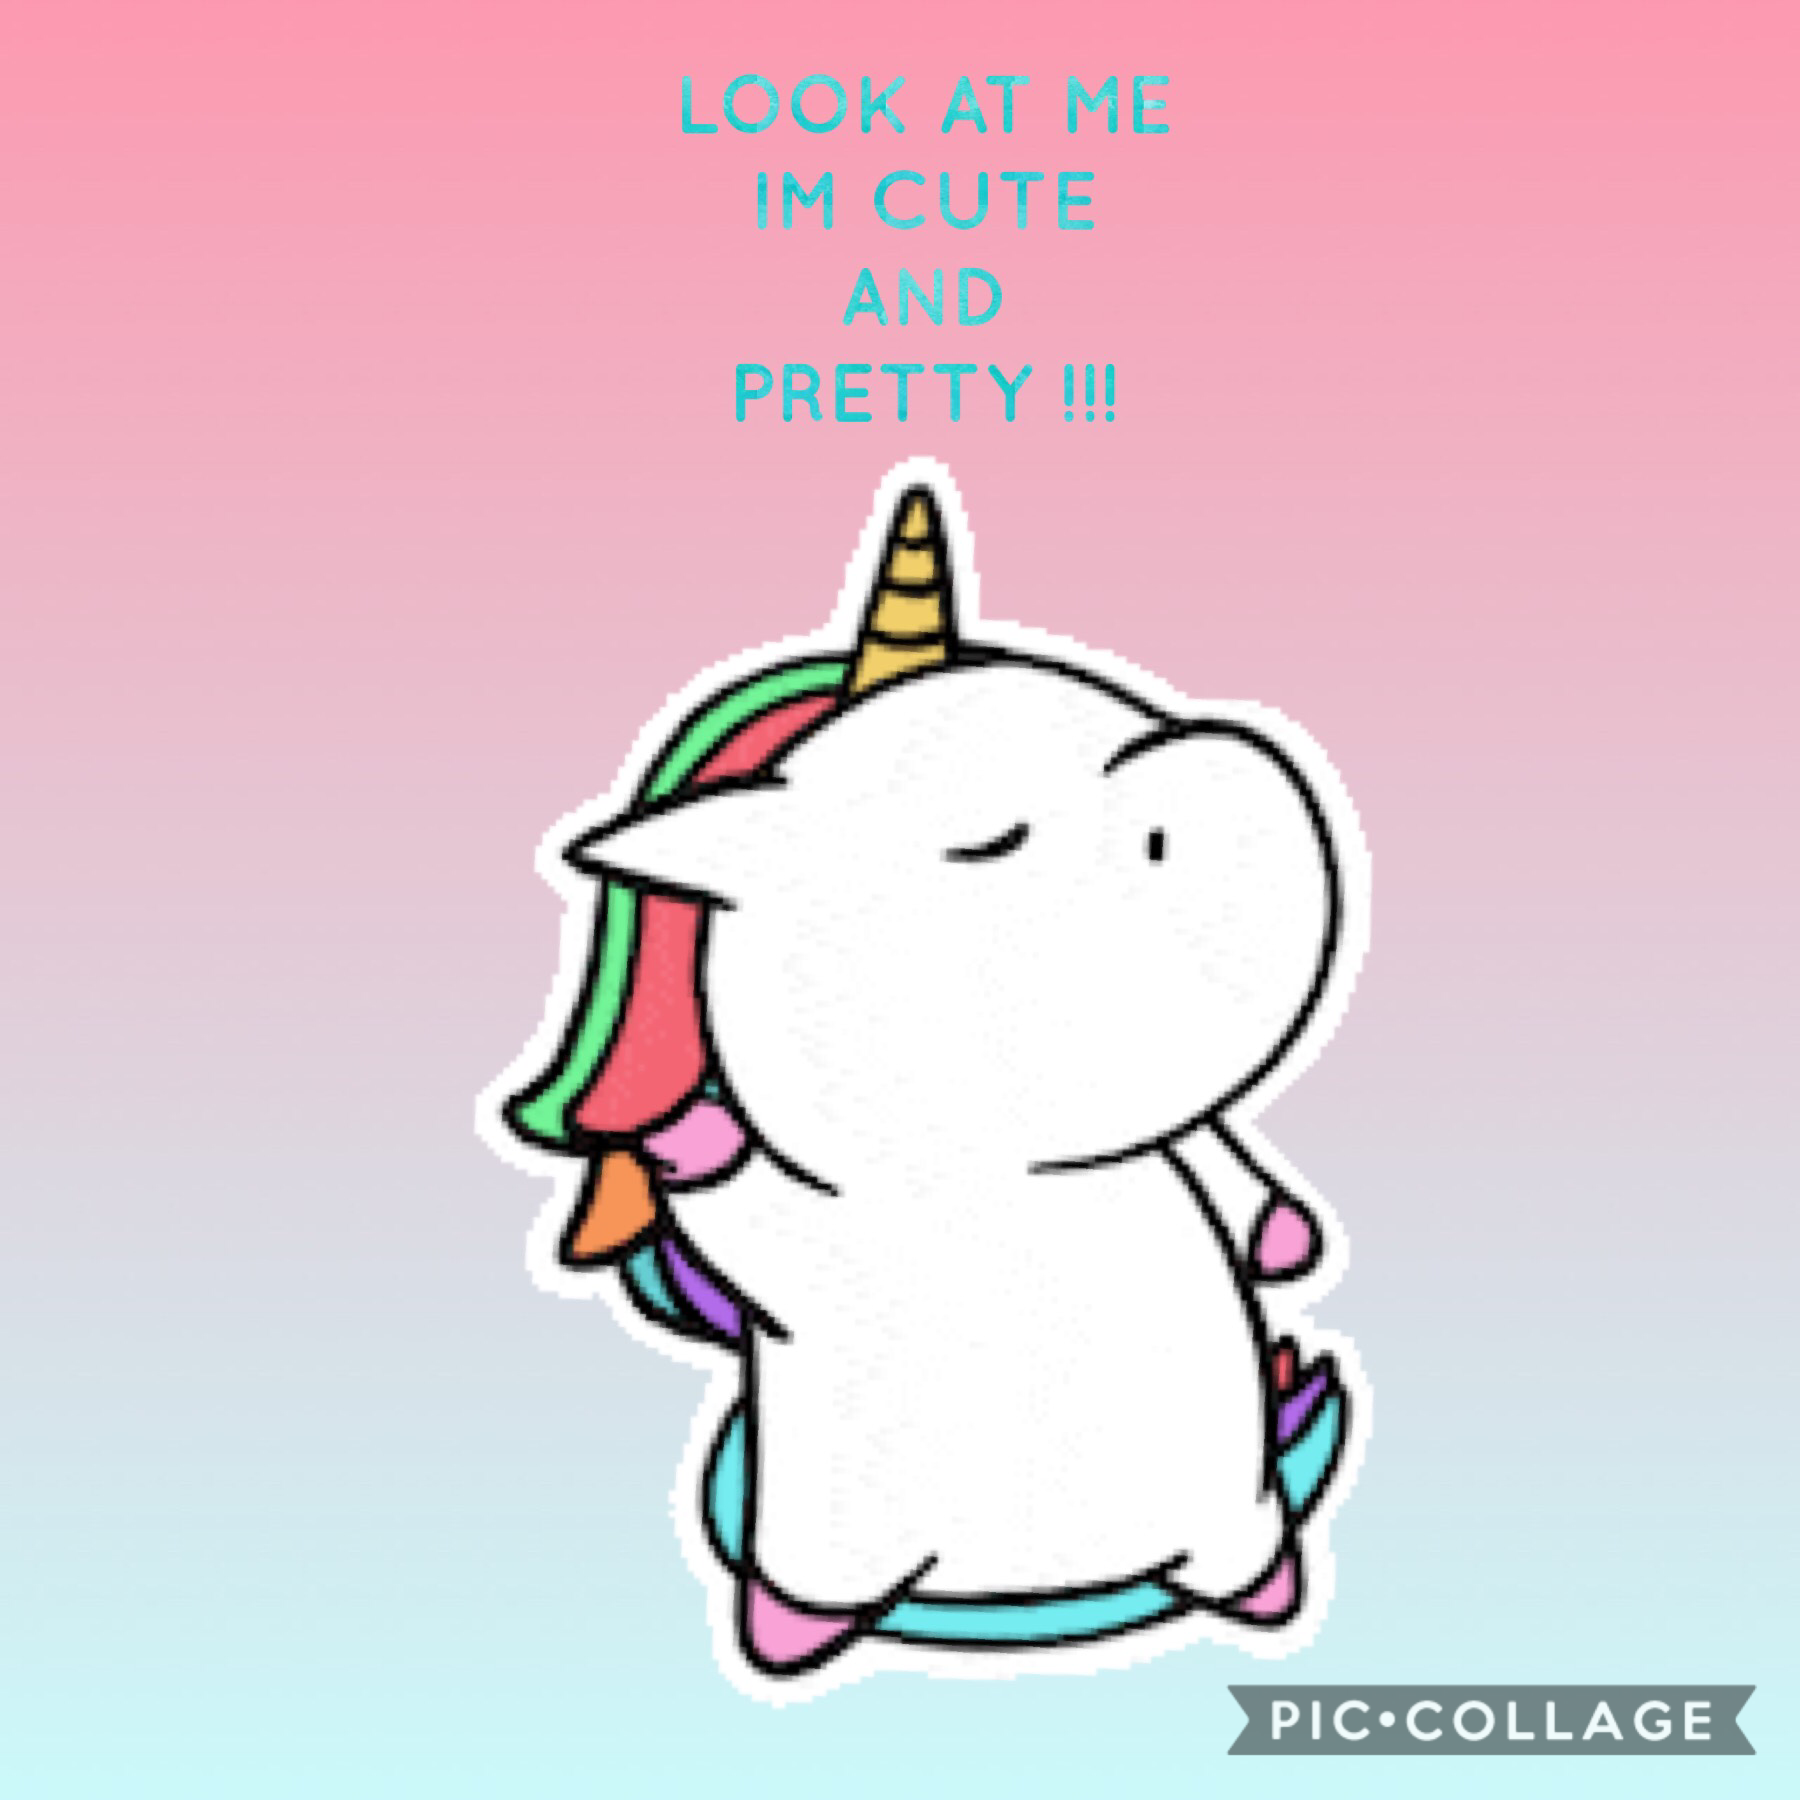 This unicorn is sassy 🦄
